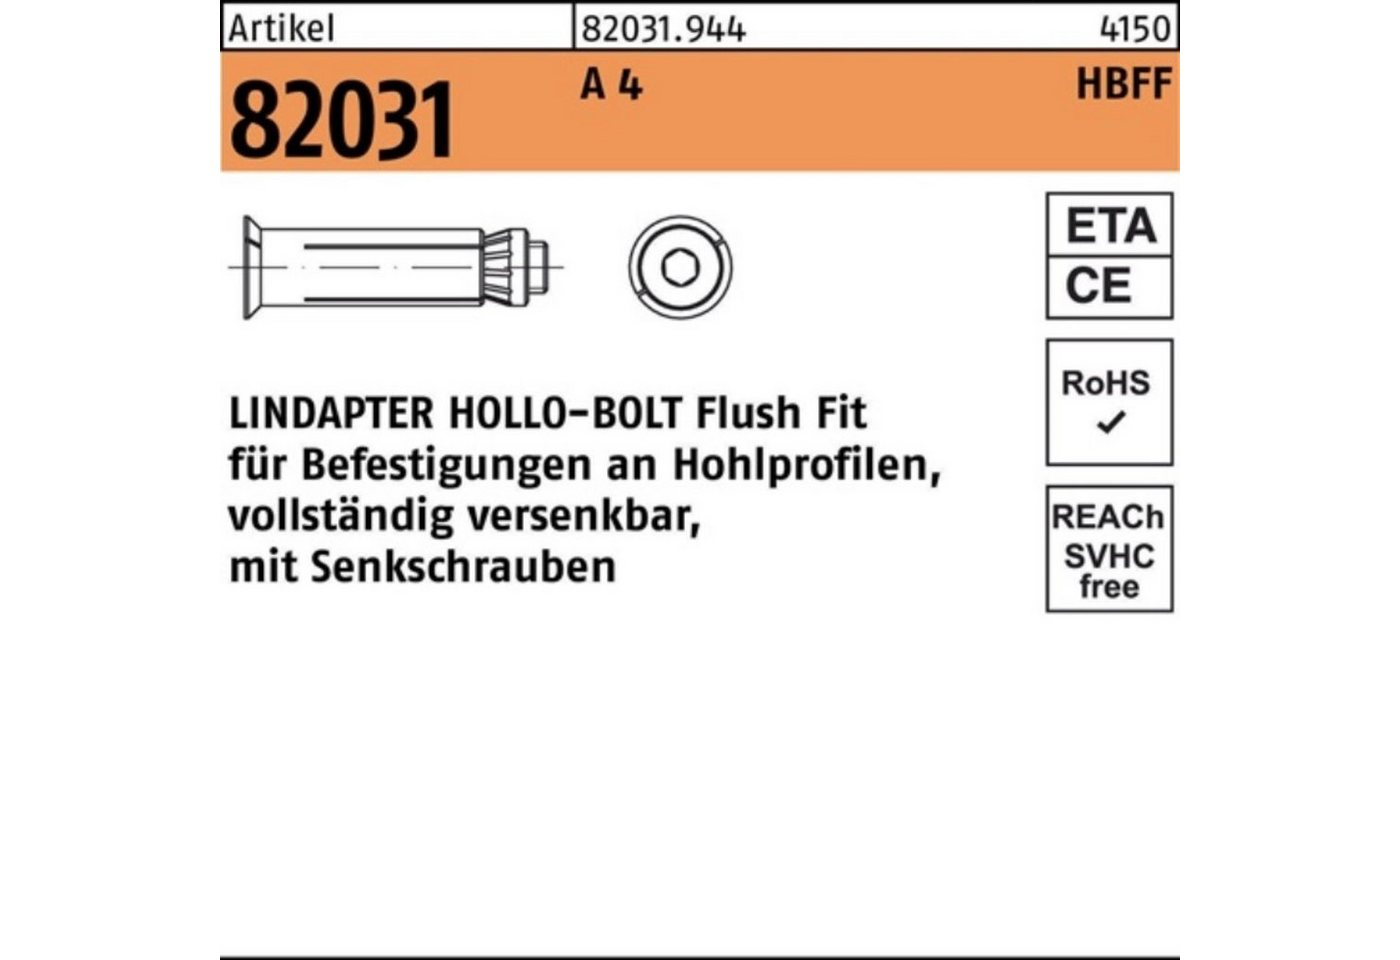 Lindapter Hohlraumdübel 100er Pack Hohlraumdübel R 82031 HBFF 10-2 (70/45) A 4 1 Stück Arti von Lindapter